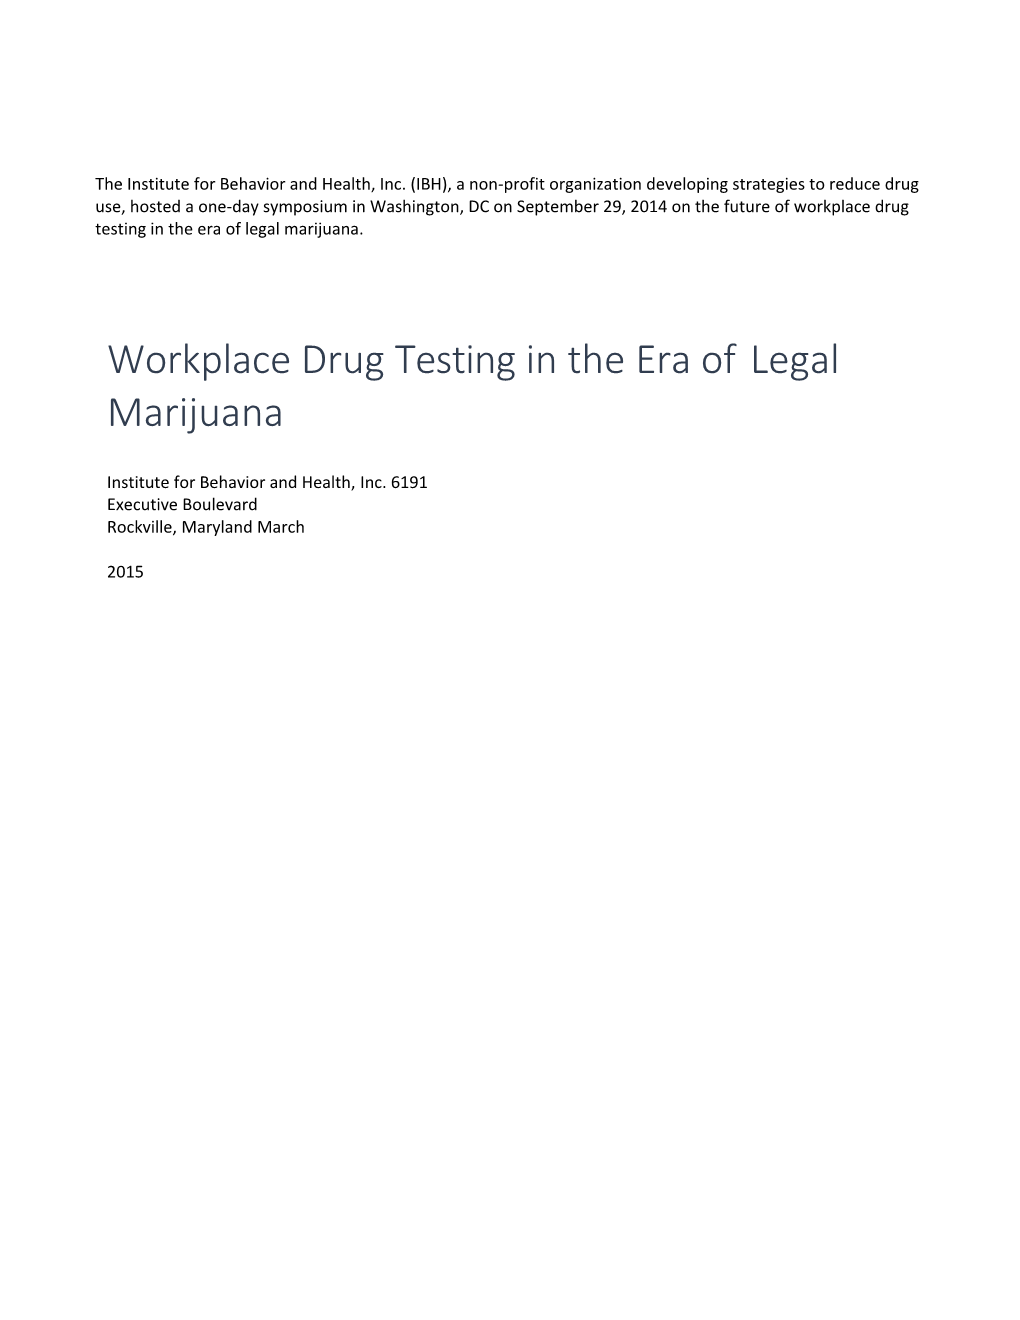 Workplace Drug Testing in the Era of Legal Marijuana